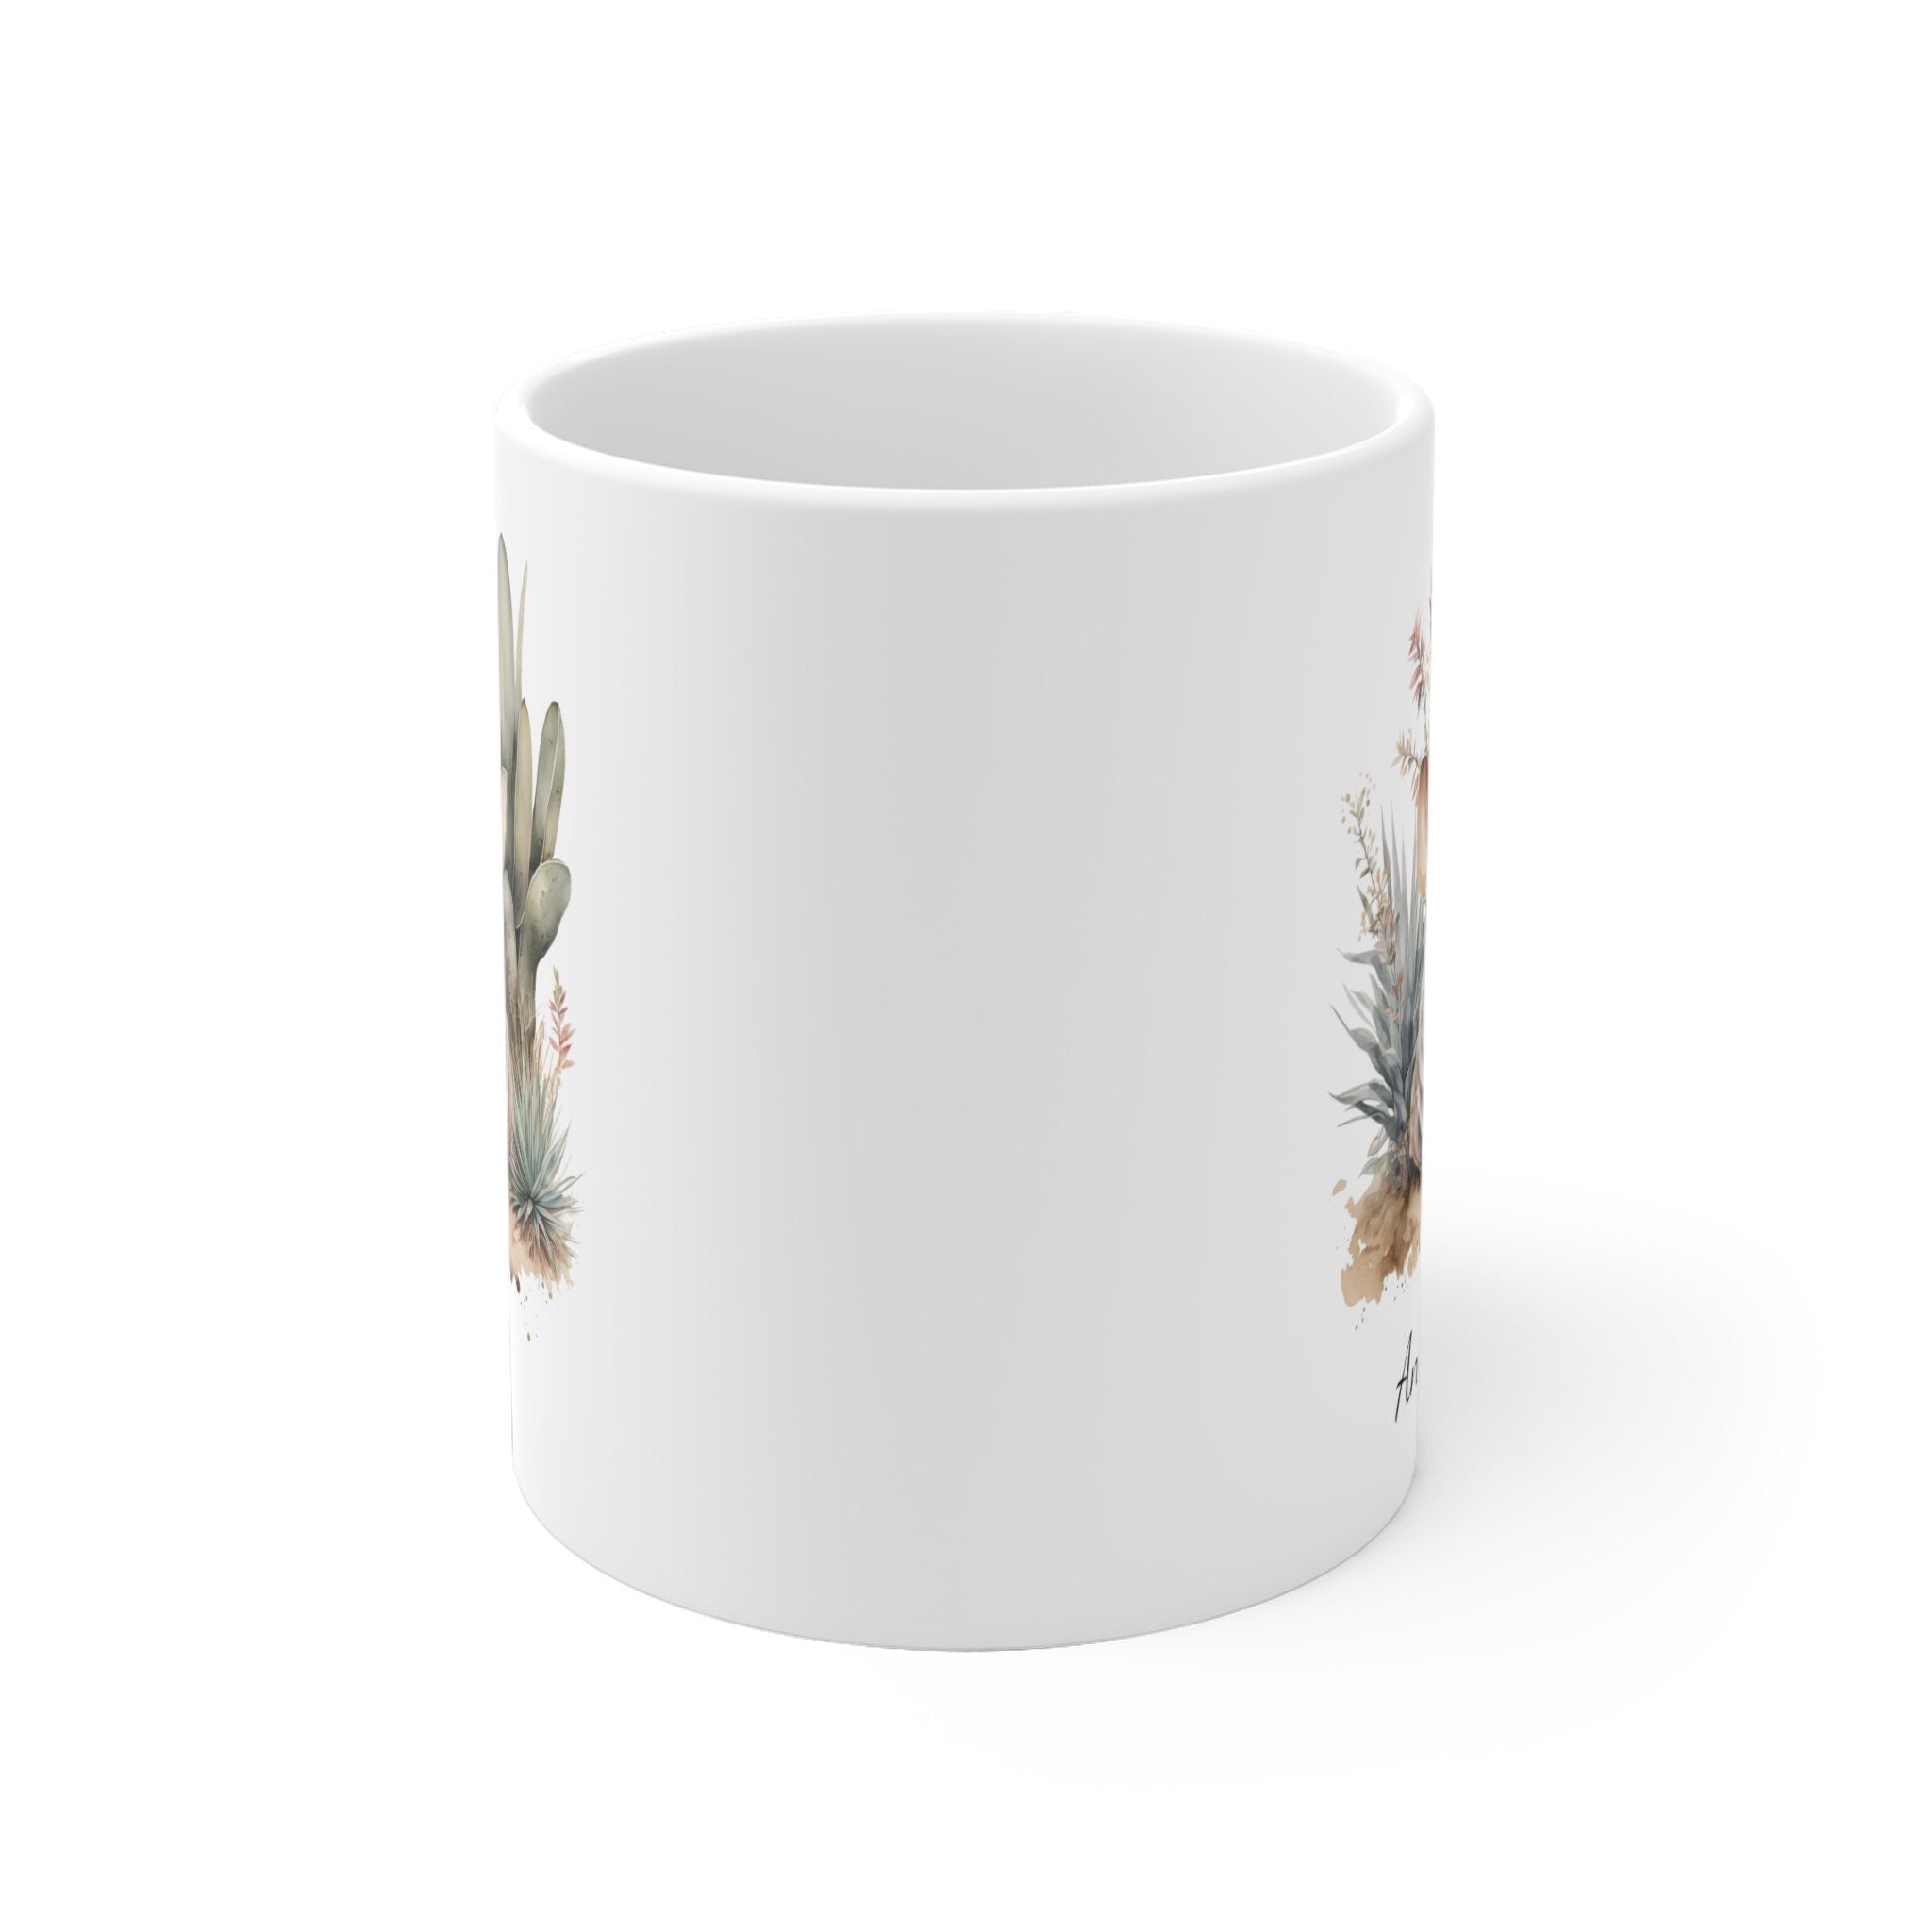 Personalized Bilby Coffee Mug